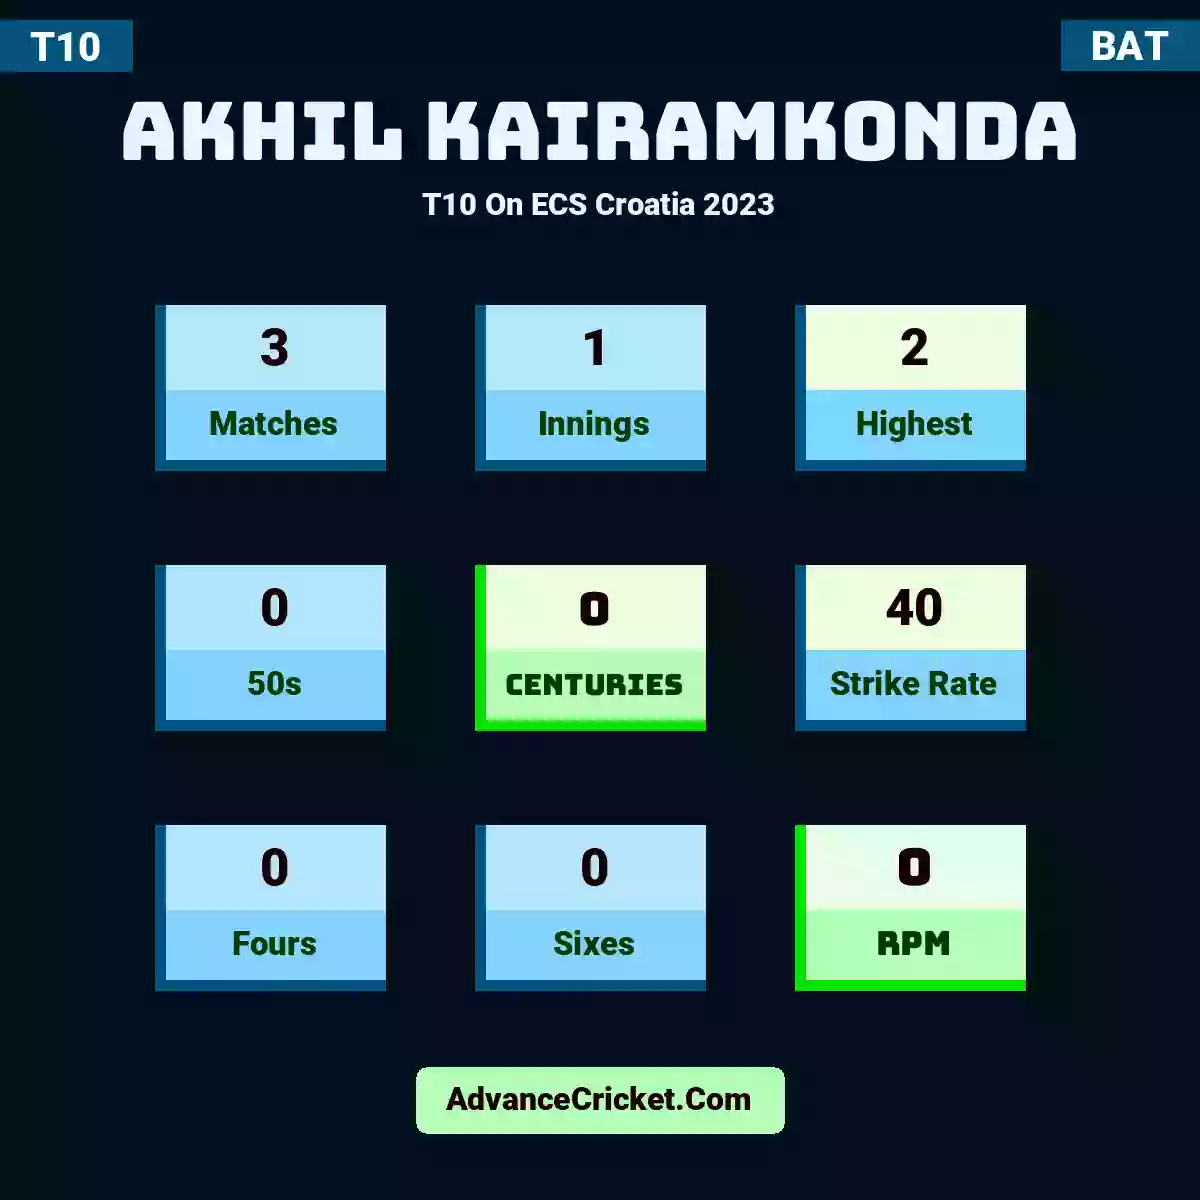 Akhil Kairamkonda T10  On ECS Croatia 2023, Akhil Kairamkonda played 3 matches, scored 2 runs as highest, 0 half-centuries, and 0 centuries, with a strike rate of 40. A.Kairamkonda hit 0 fours and 0 sixes, with an RPM of 0.